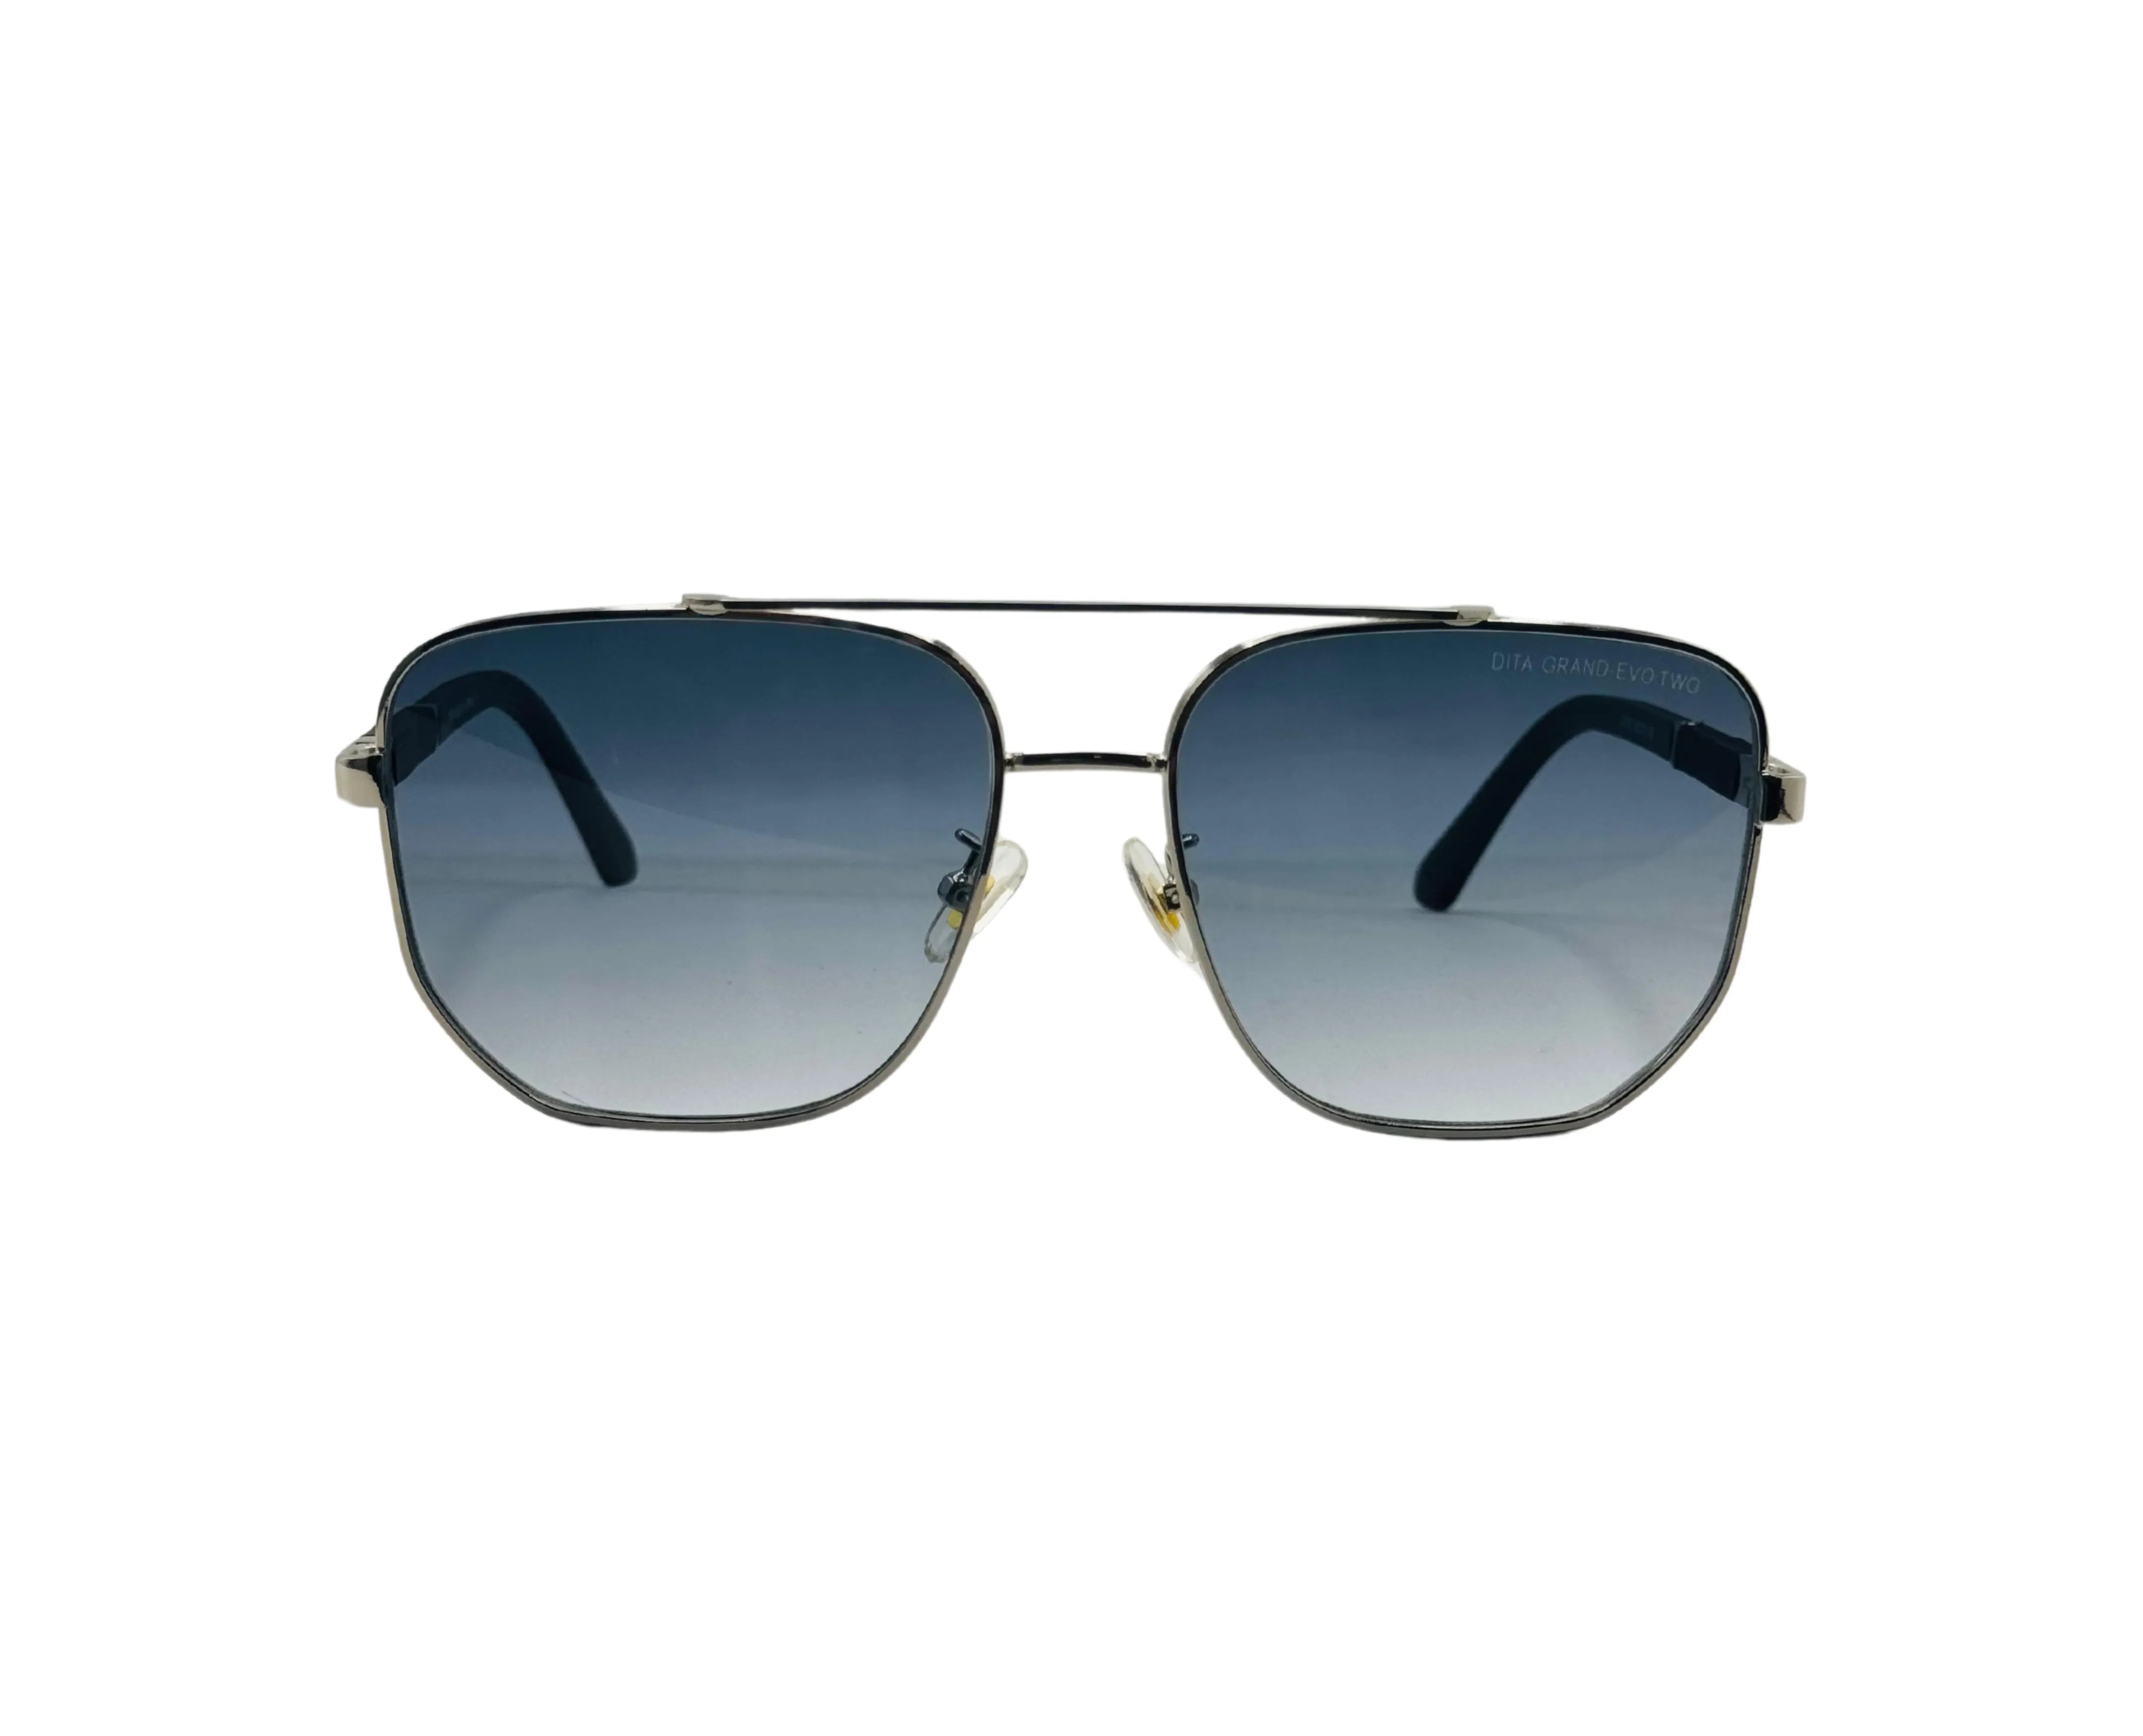 NS Deluxe - 23202 - Silver - Sunglasses